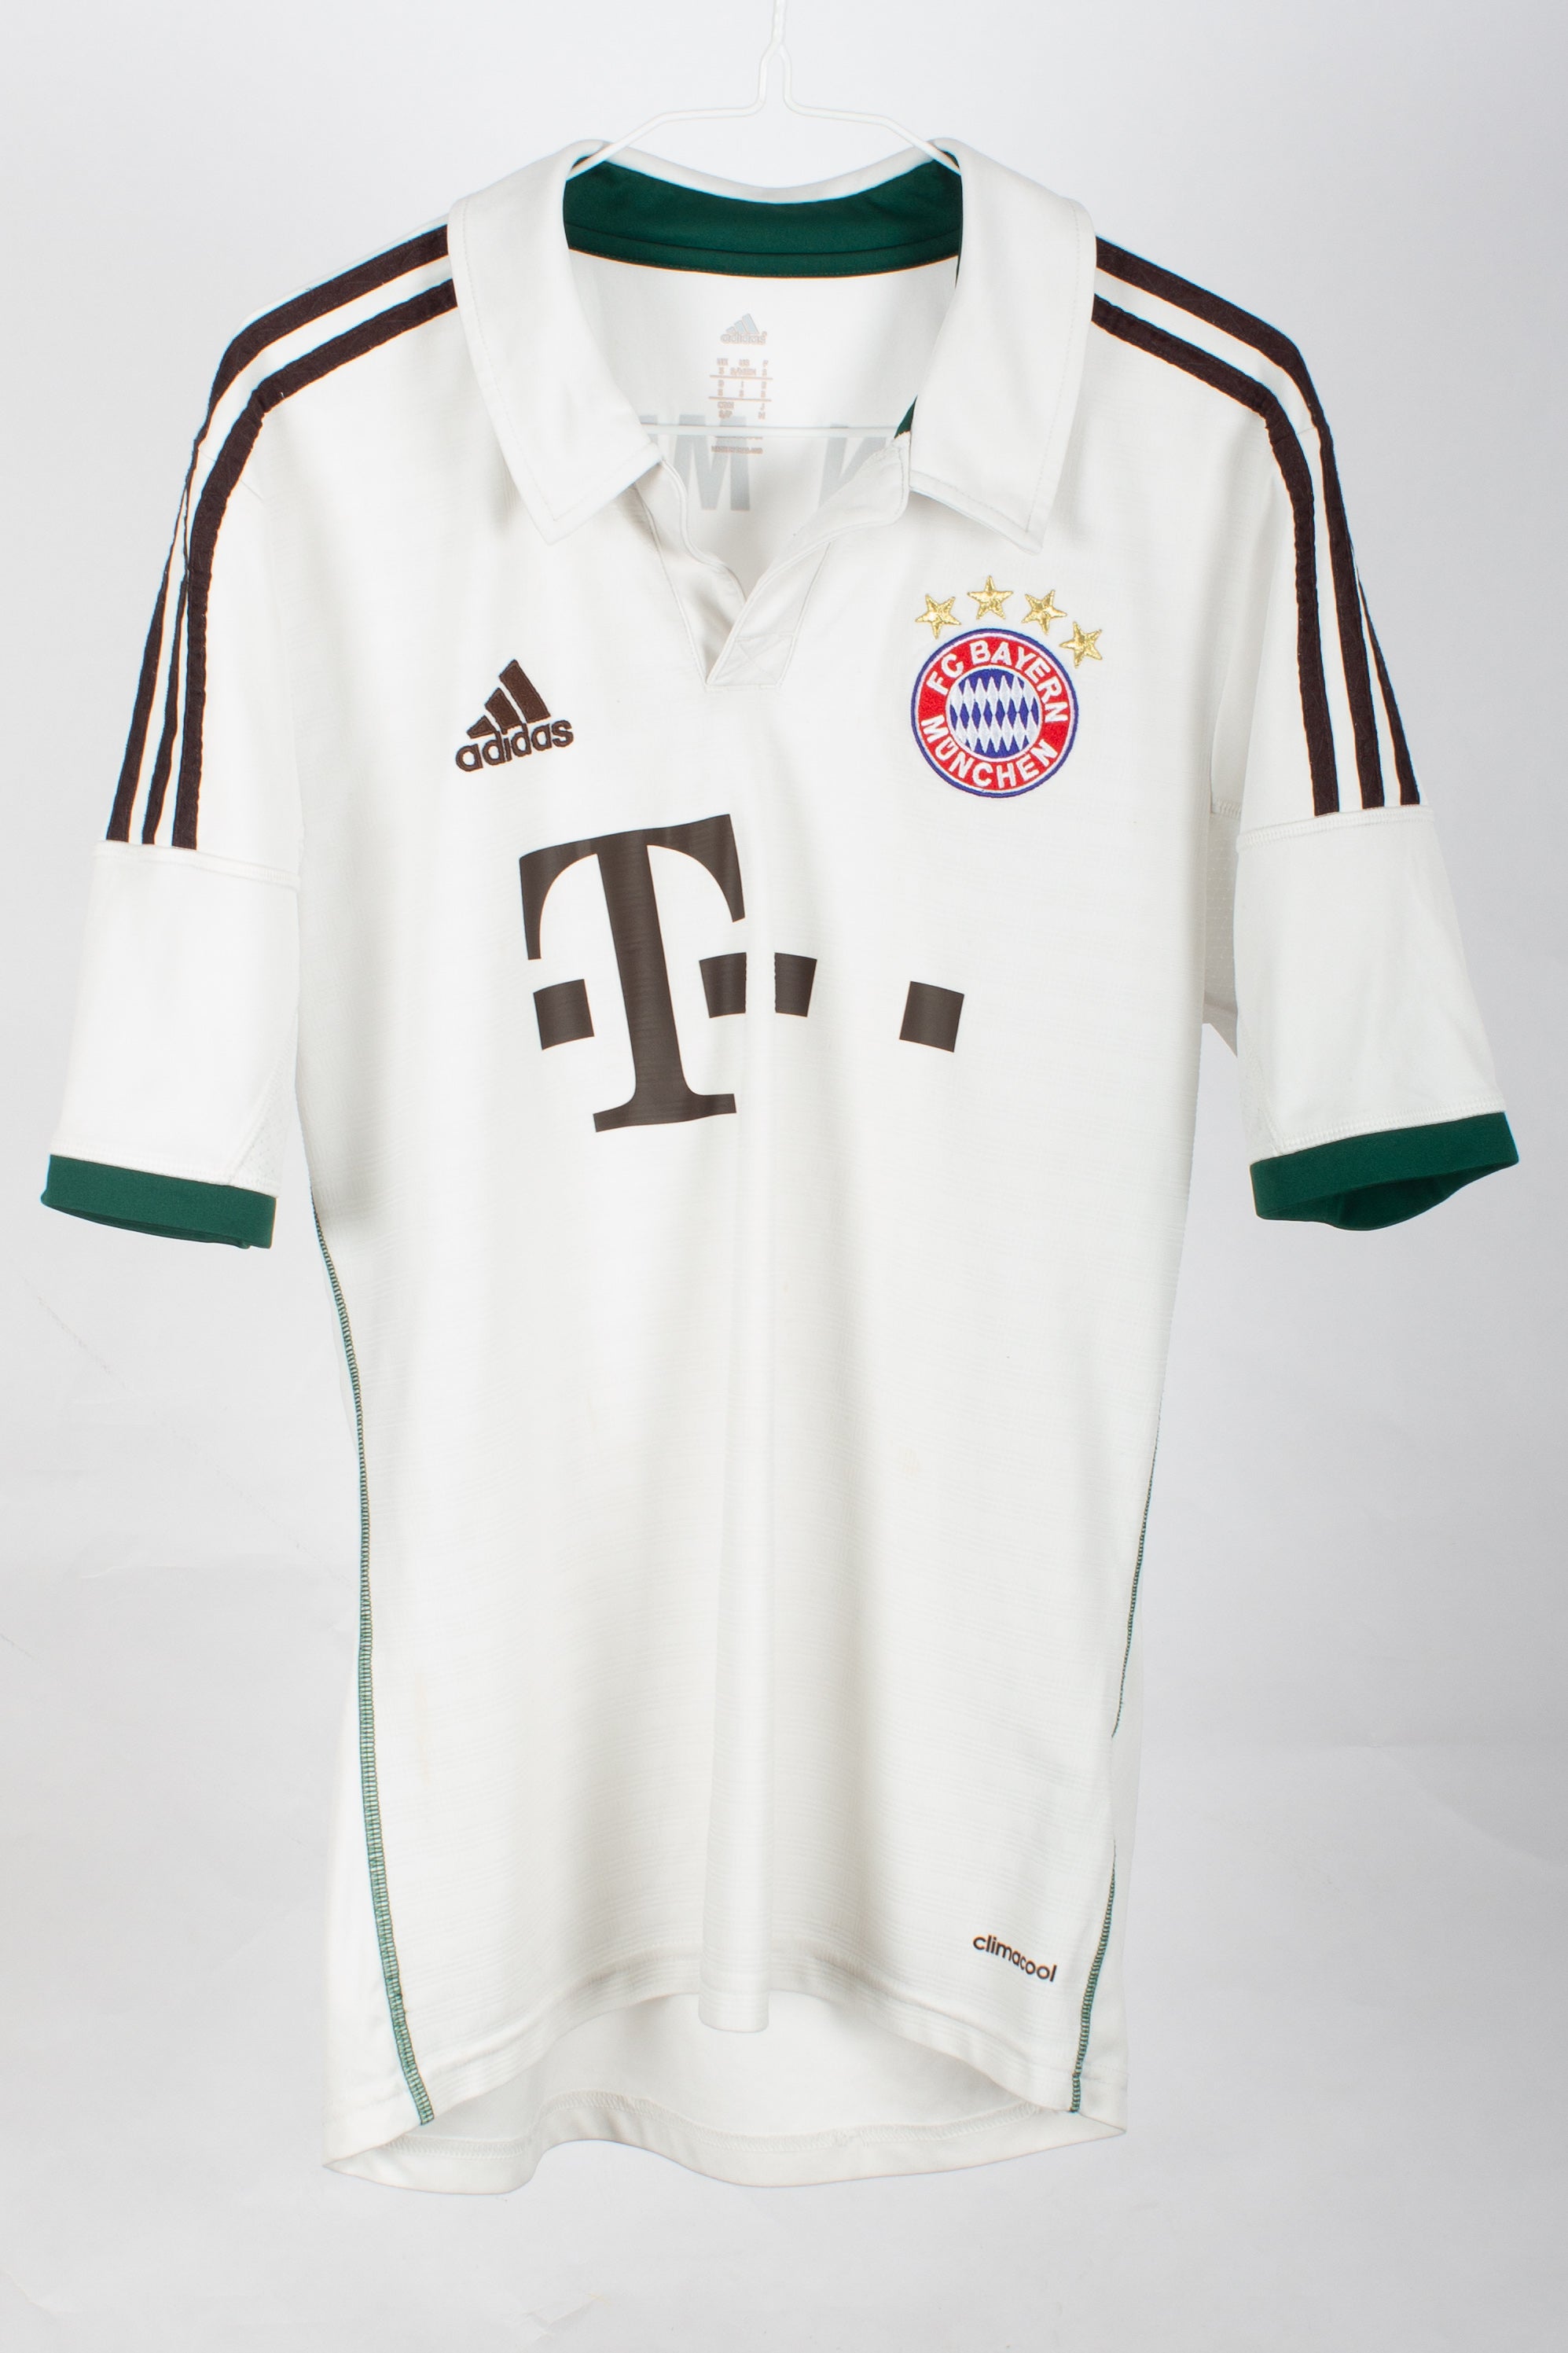 Bayern Munich 2013/14 Away Shirt (S)